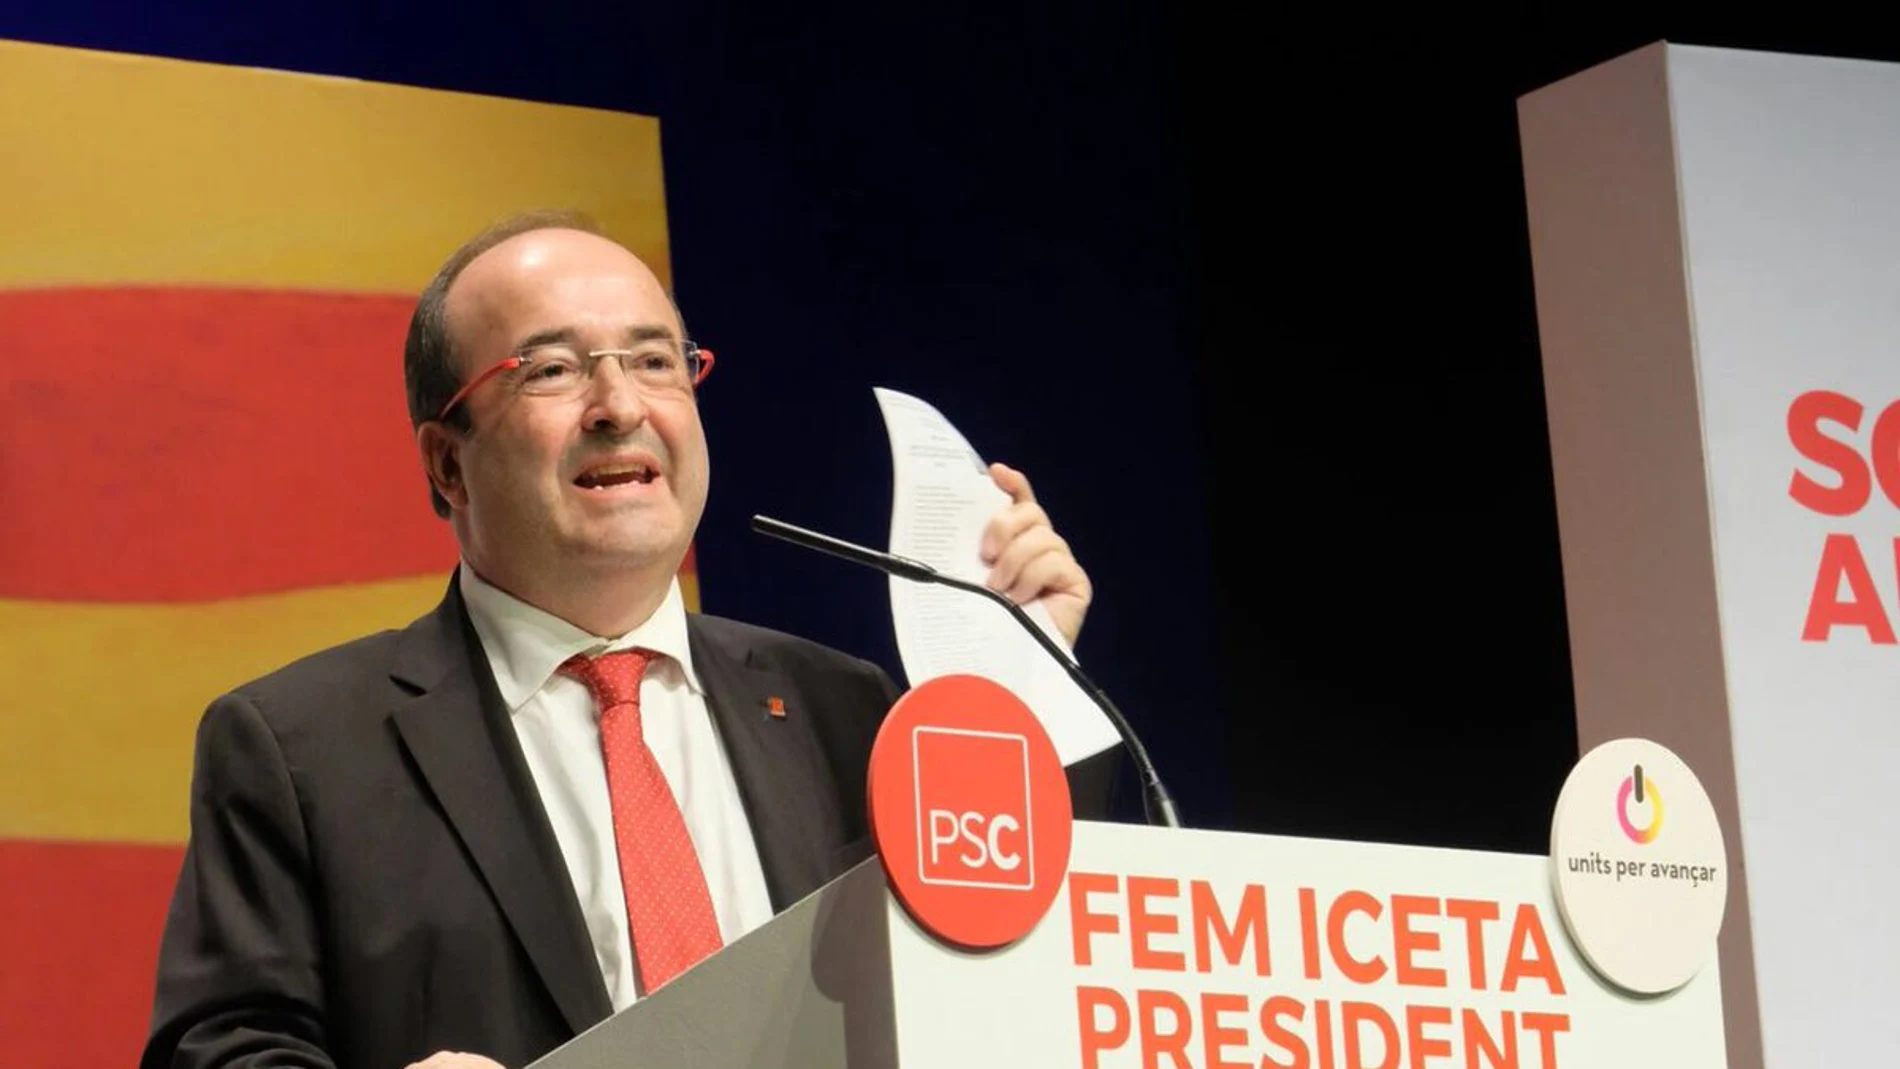 El candidato del PSC, Miquel Iceta